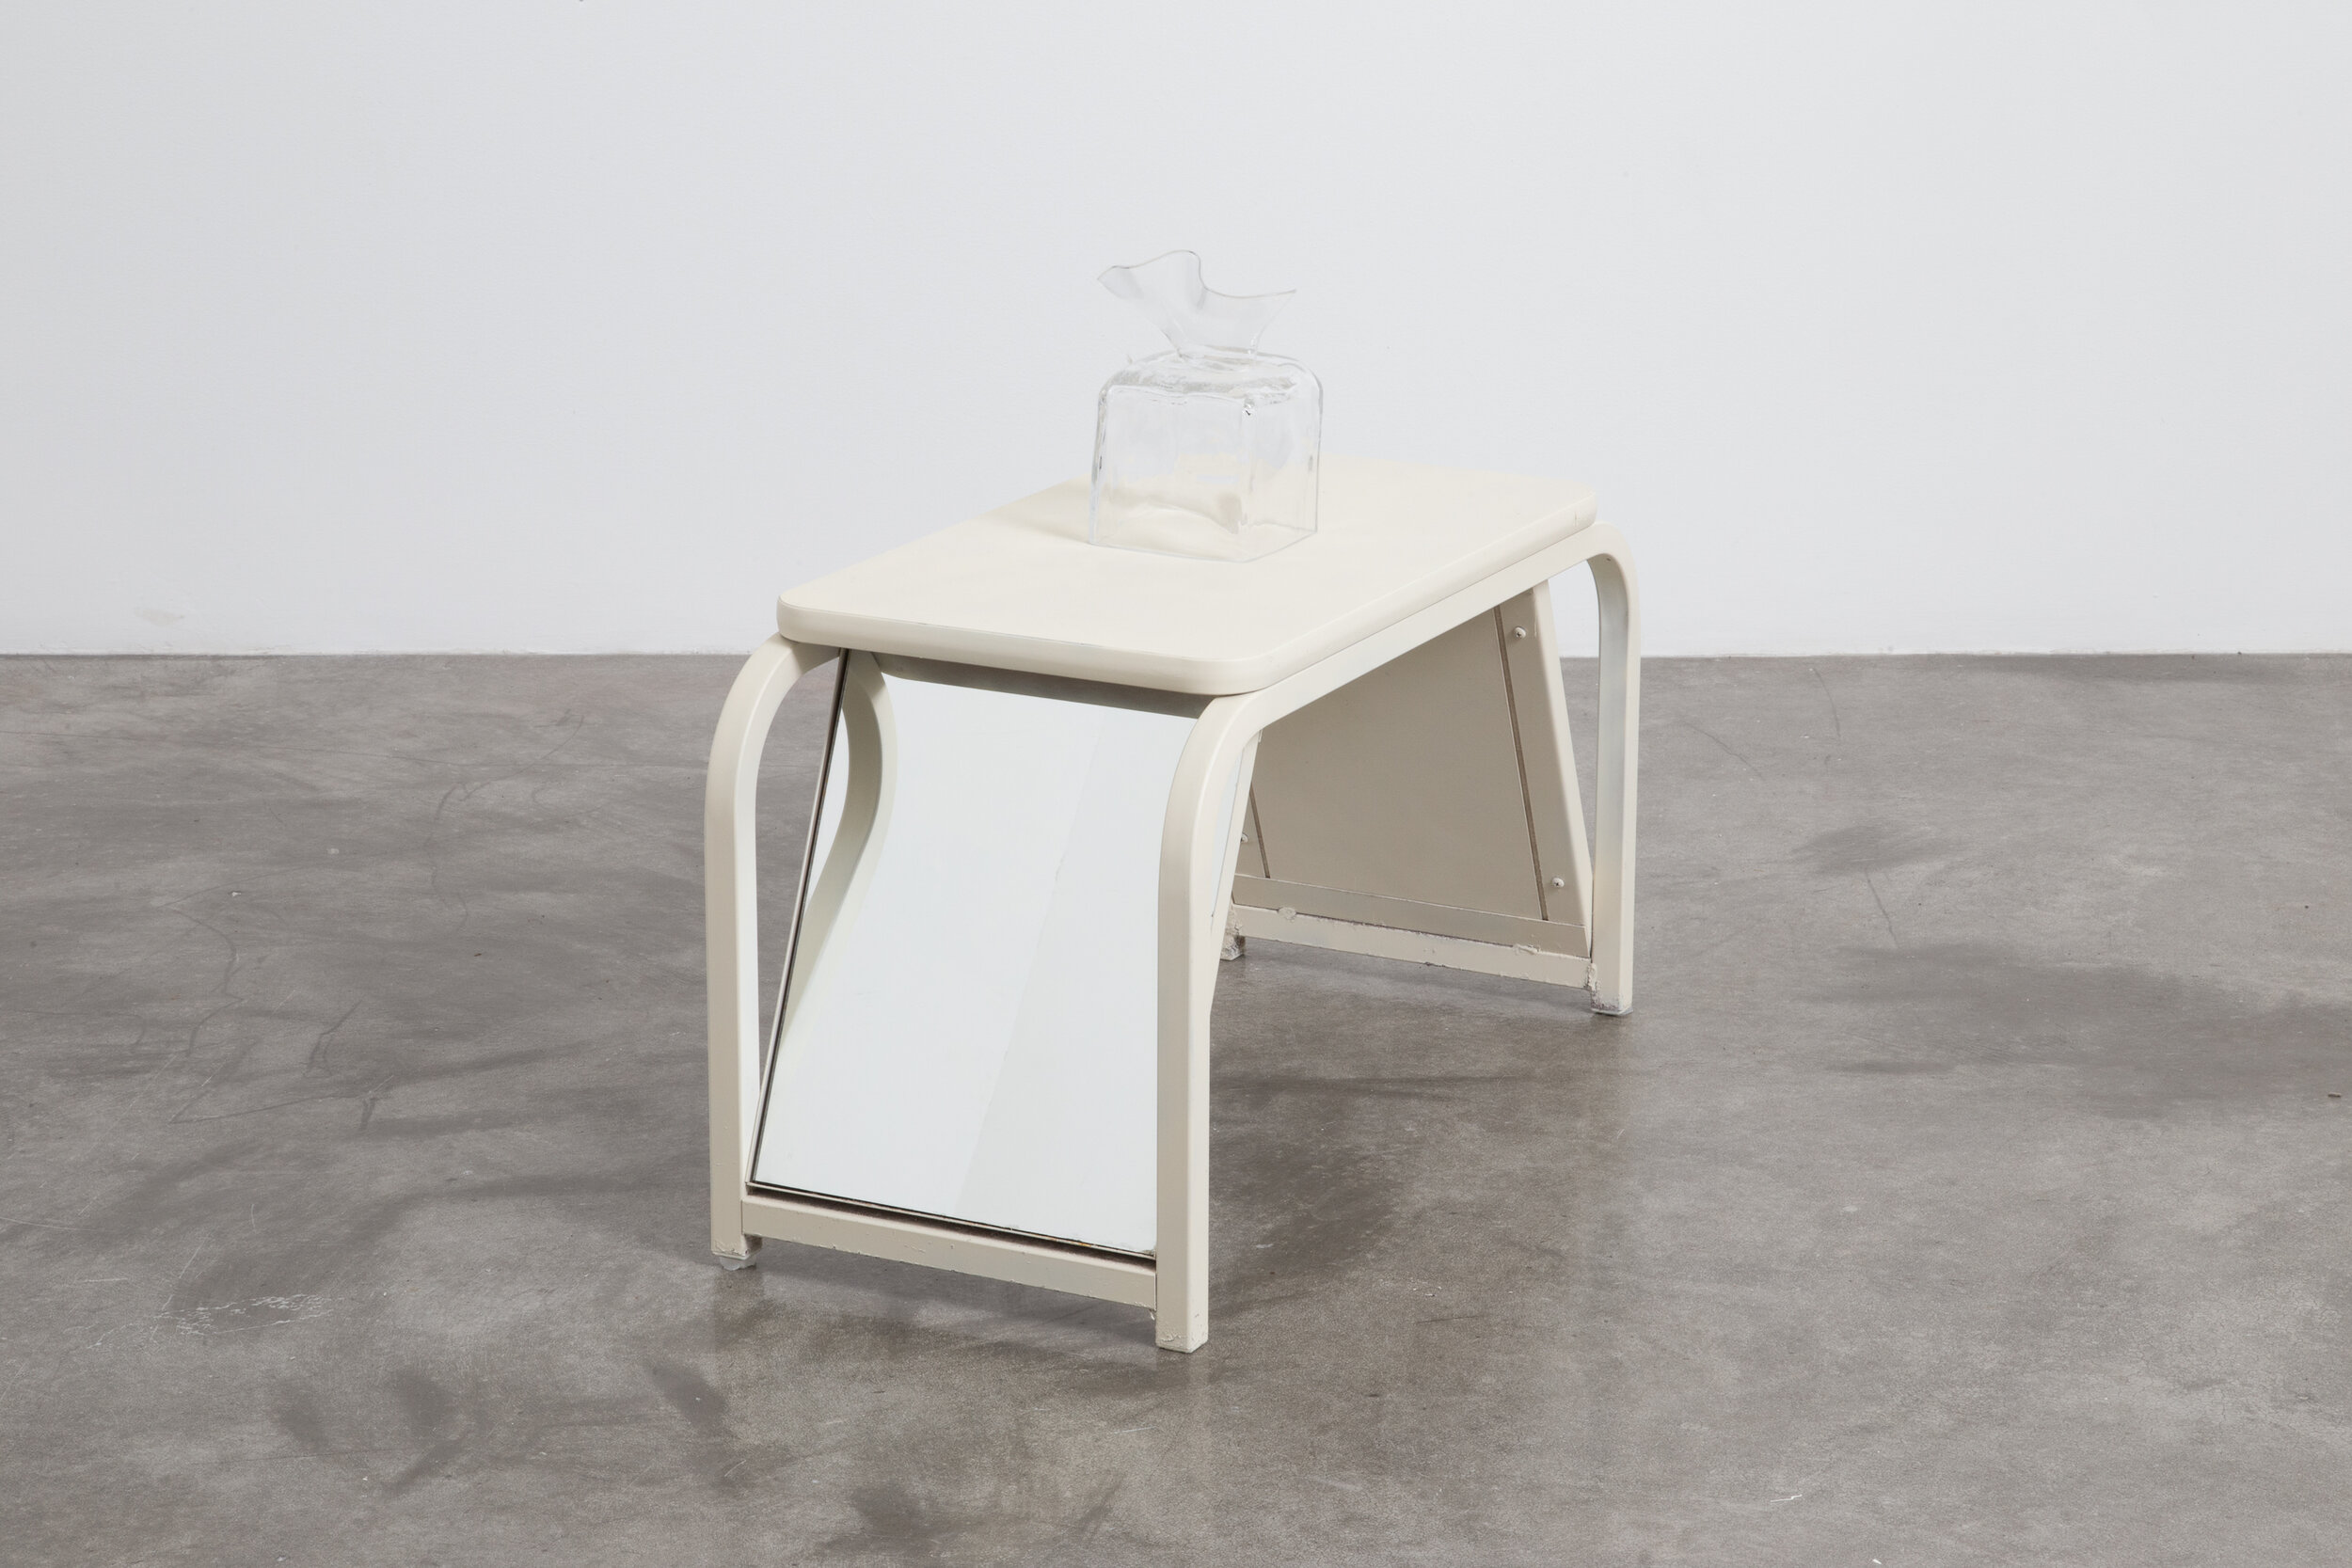  Tissue Box Prototype, 2019, Glass, Enamel Paint, Shoe Bench, 12 x 24 x 36&nbsp;“ 